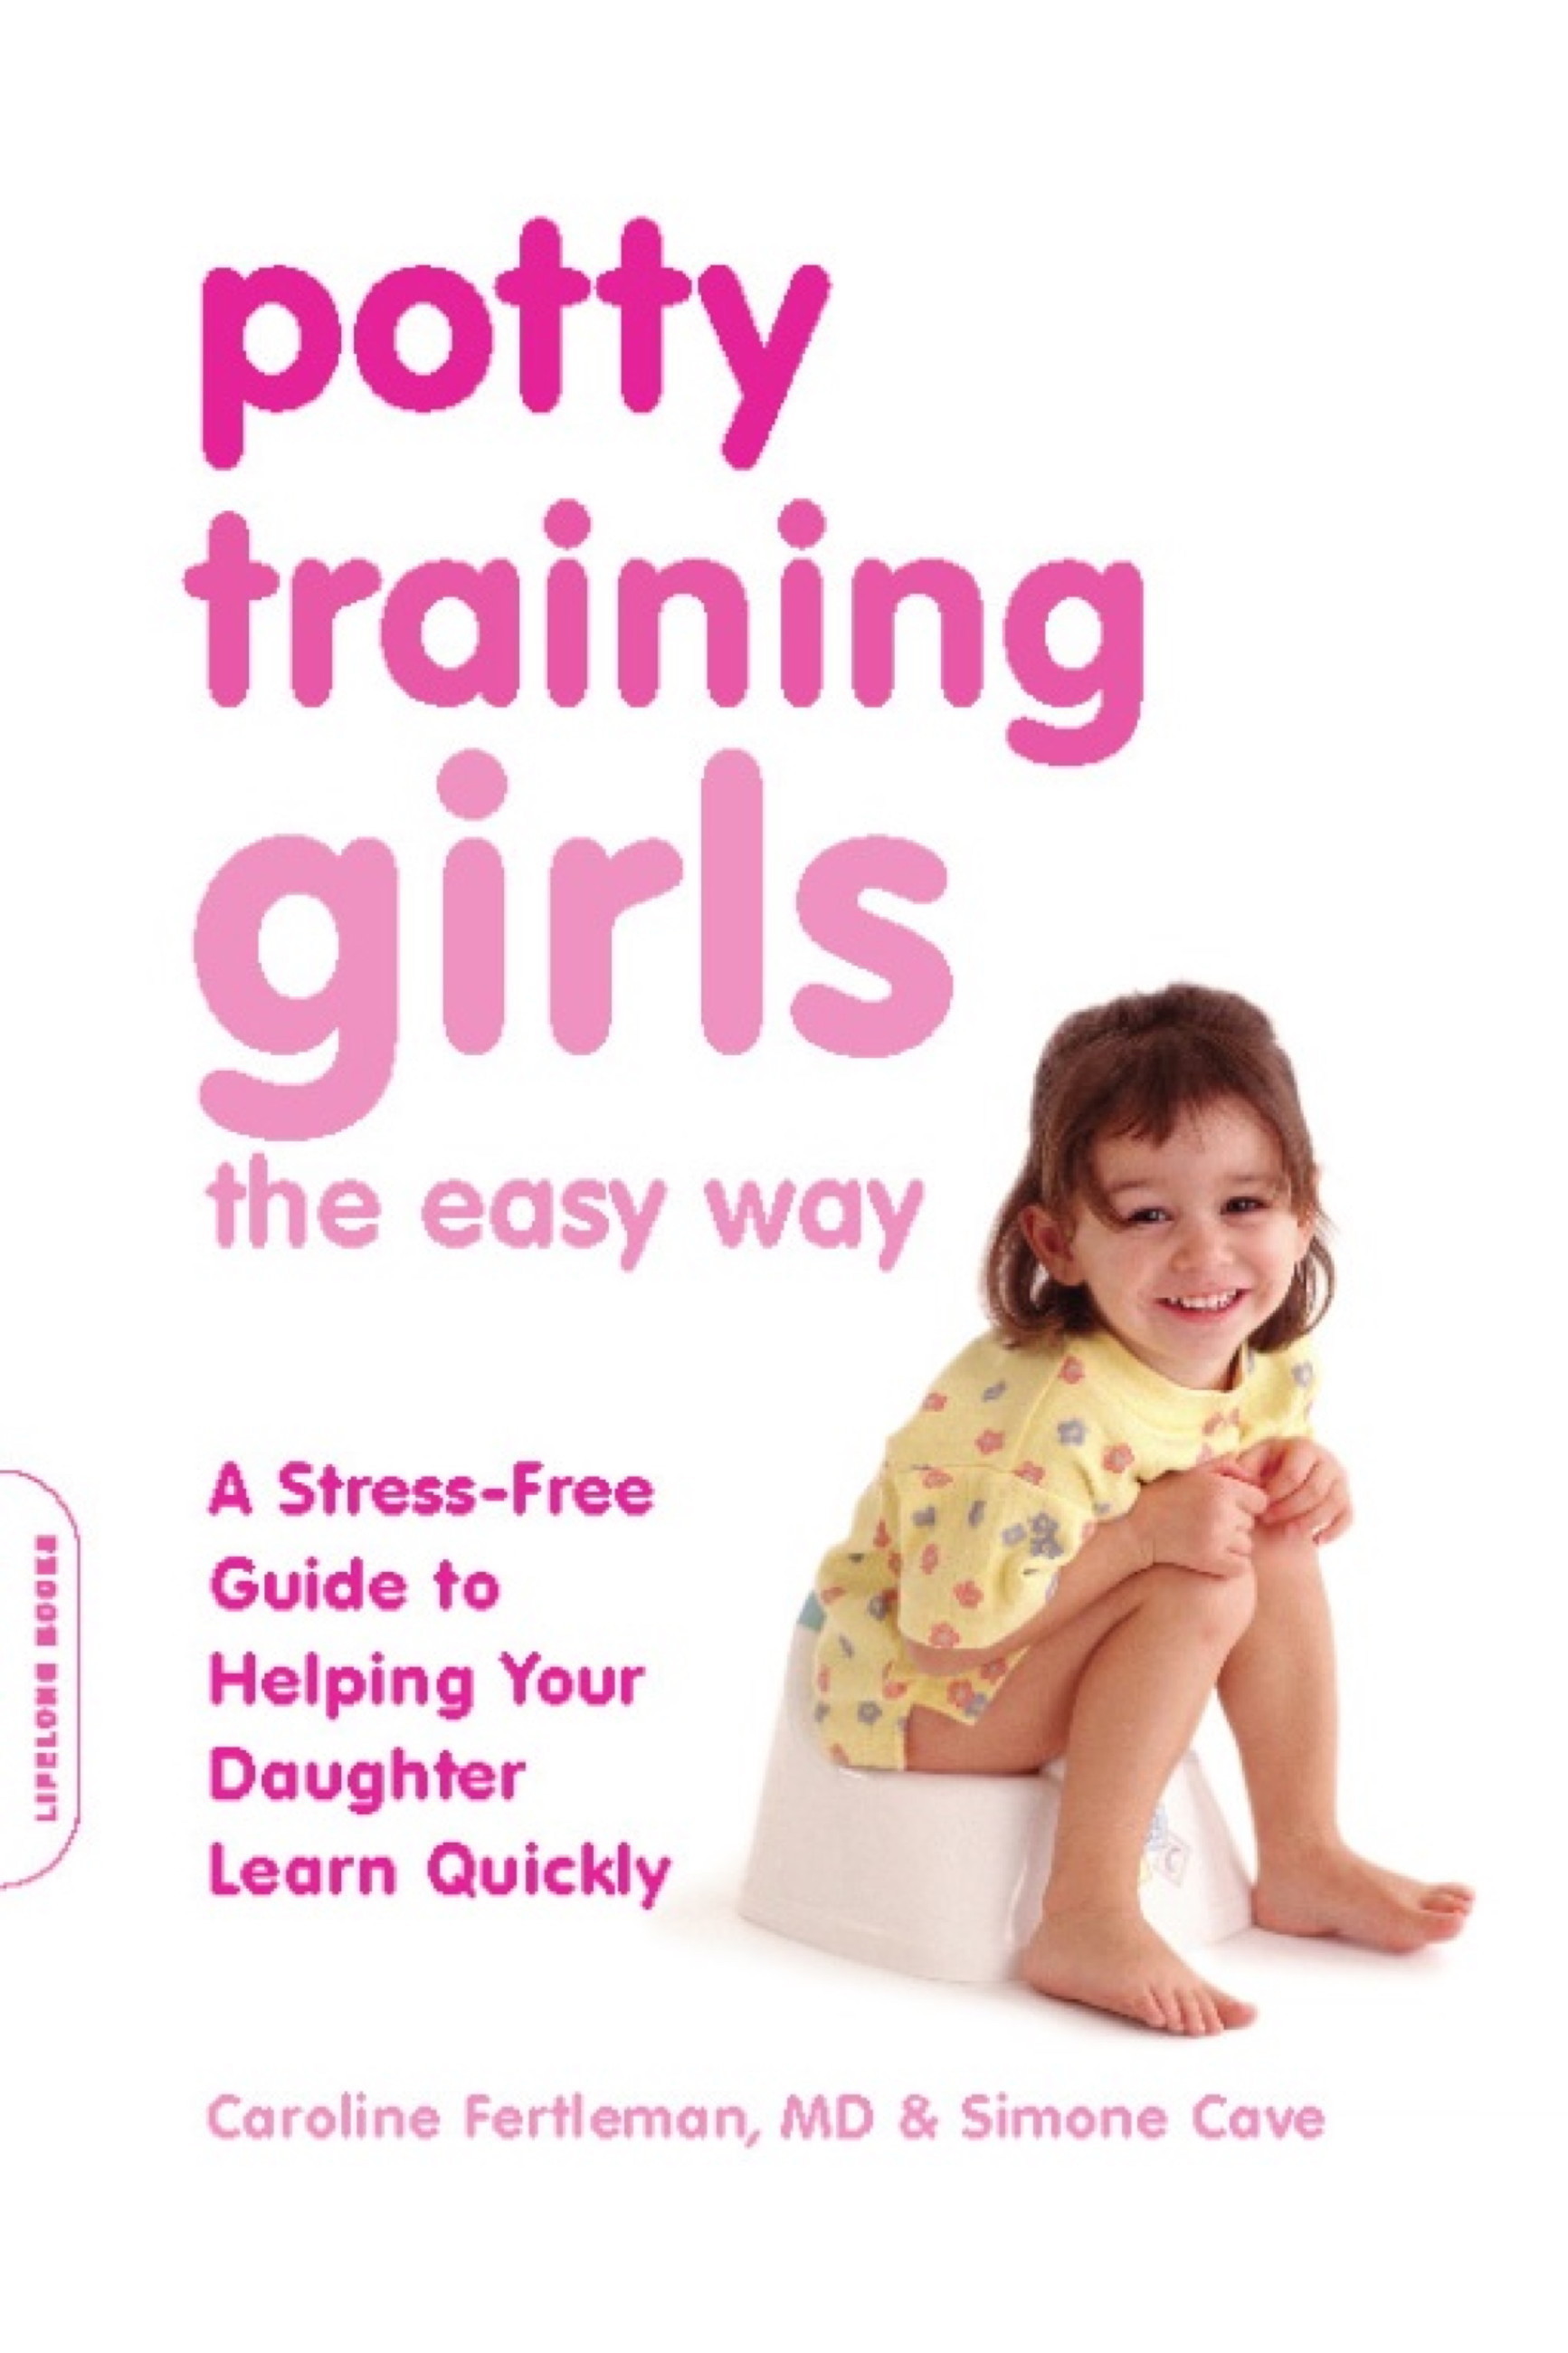 Potty Training Girls the Easy Way by Caroline Fertleman